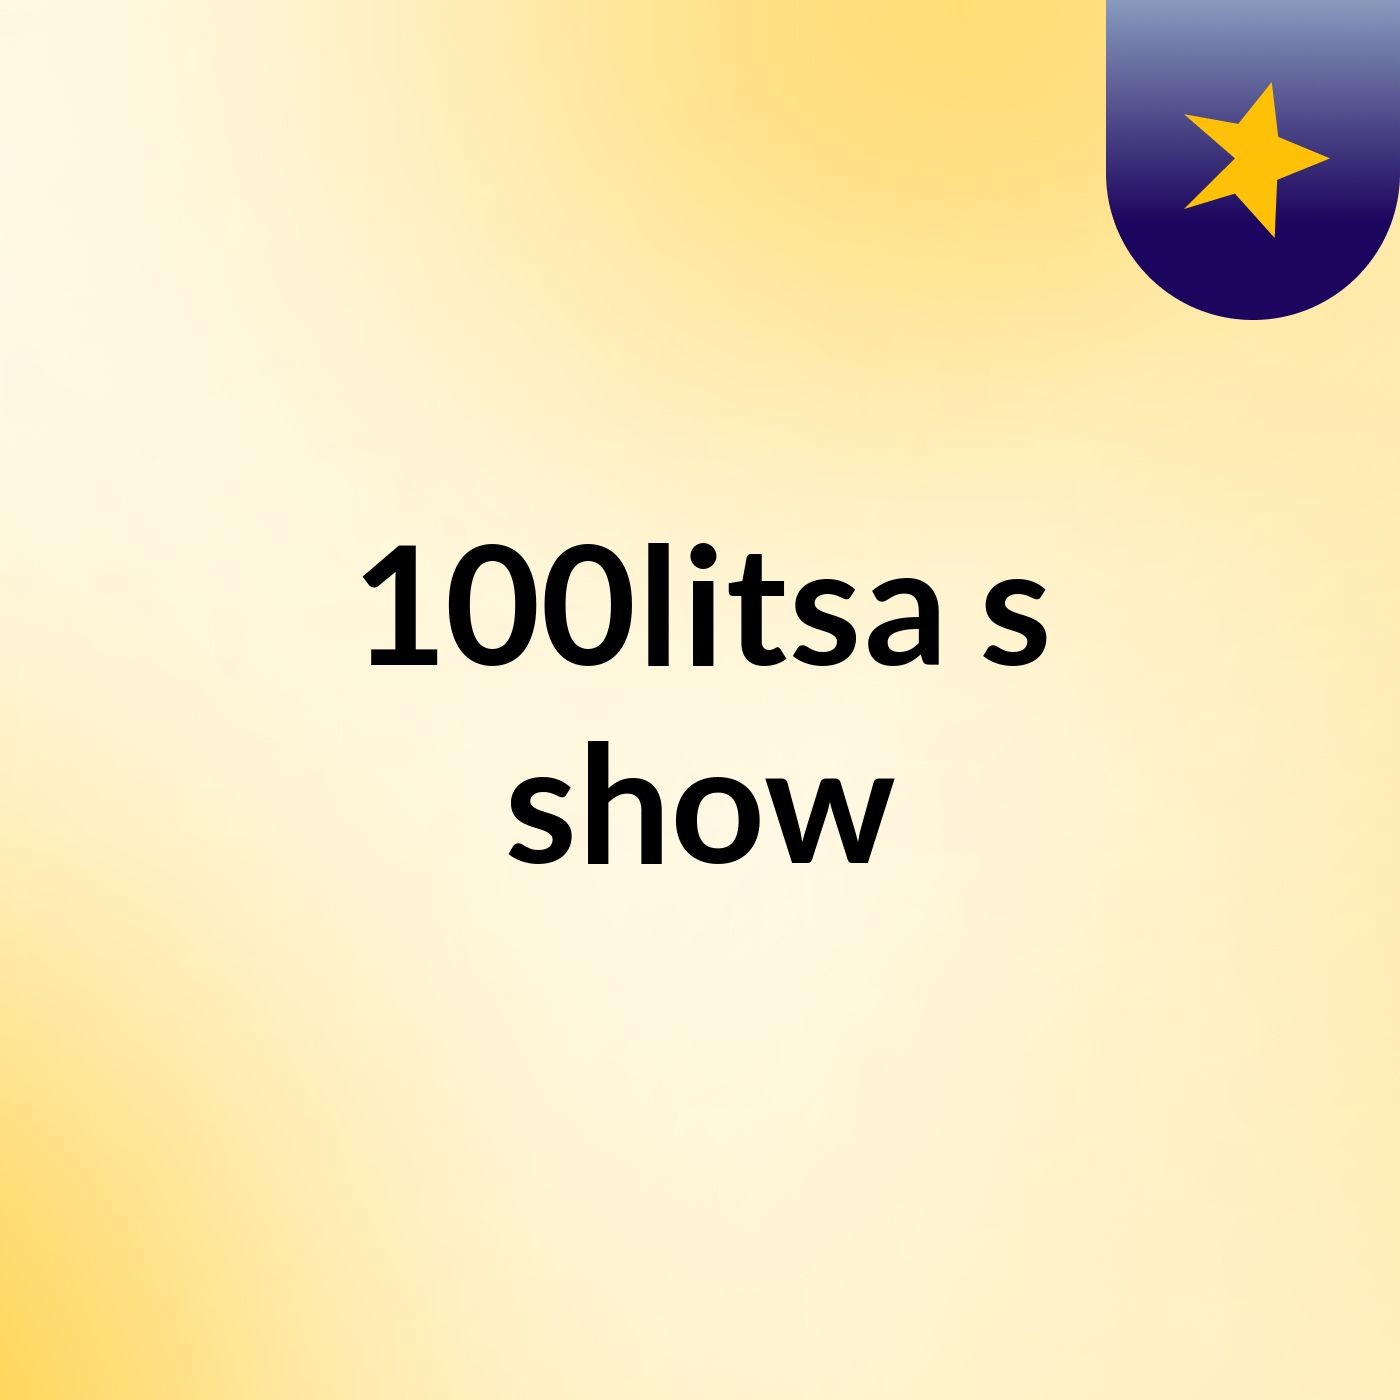 100litsa's show